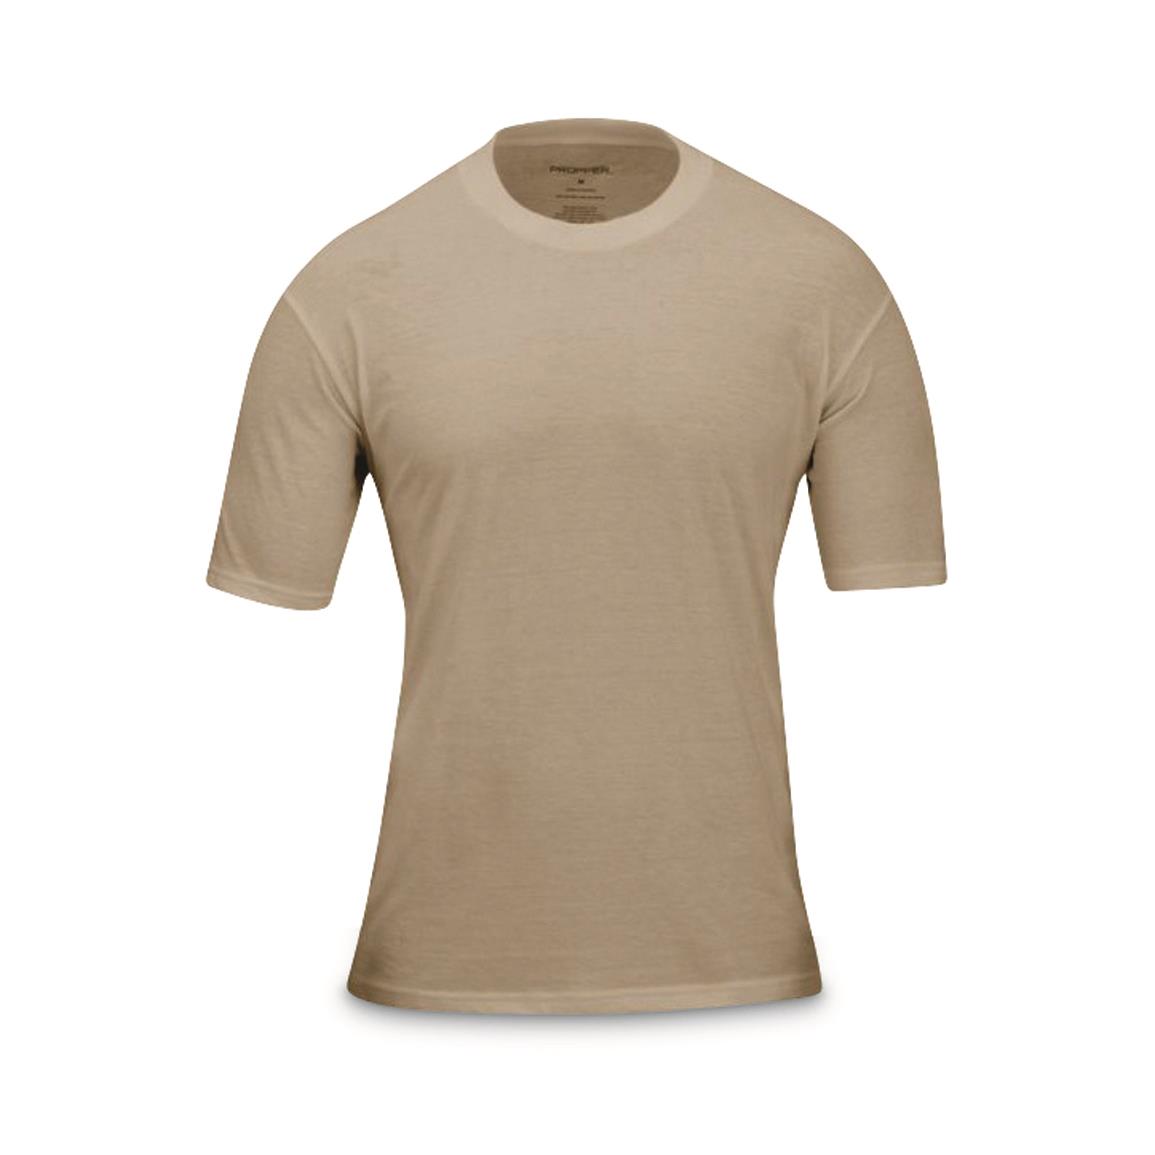 U.S. Military Surplus OCP Uniform T-Shirts, 3 Pack, New